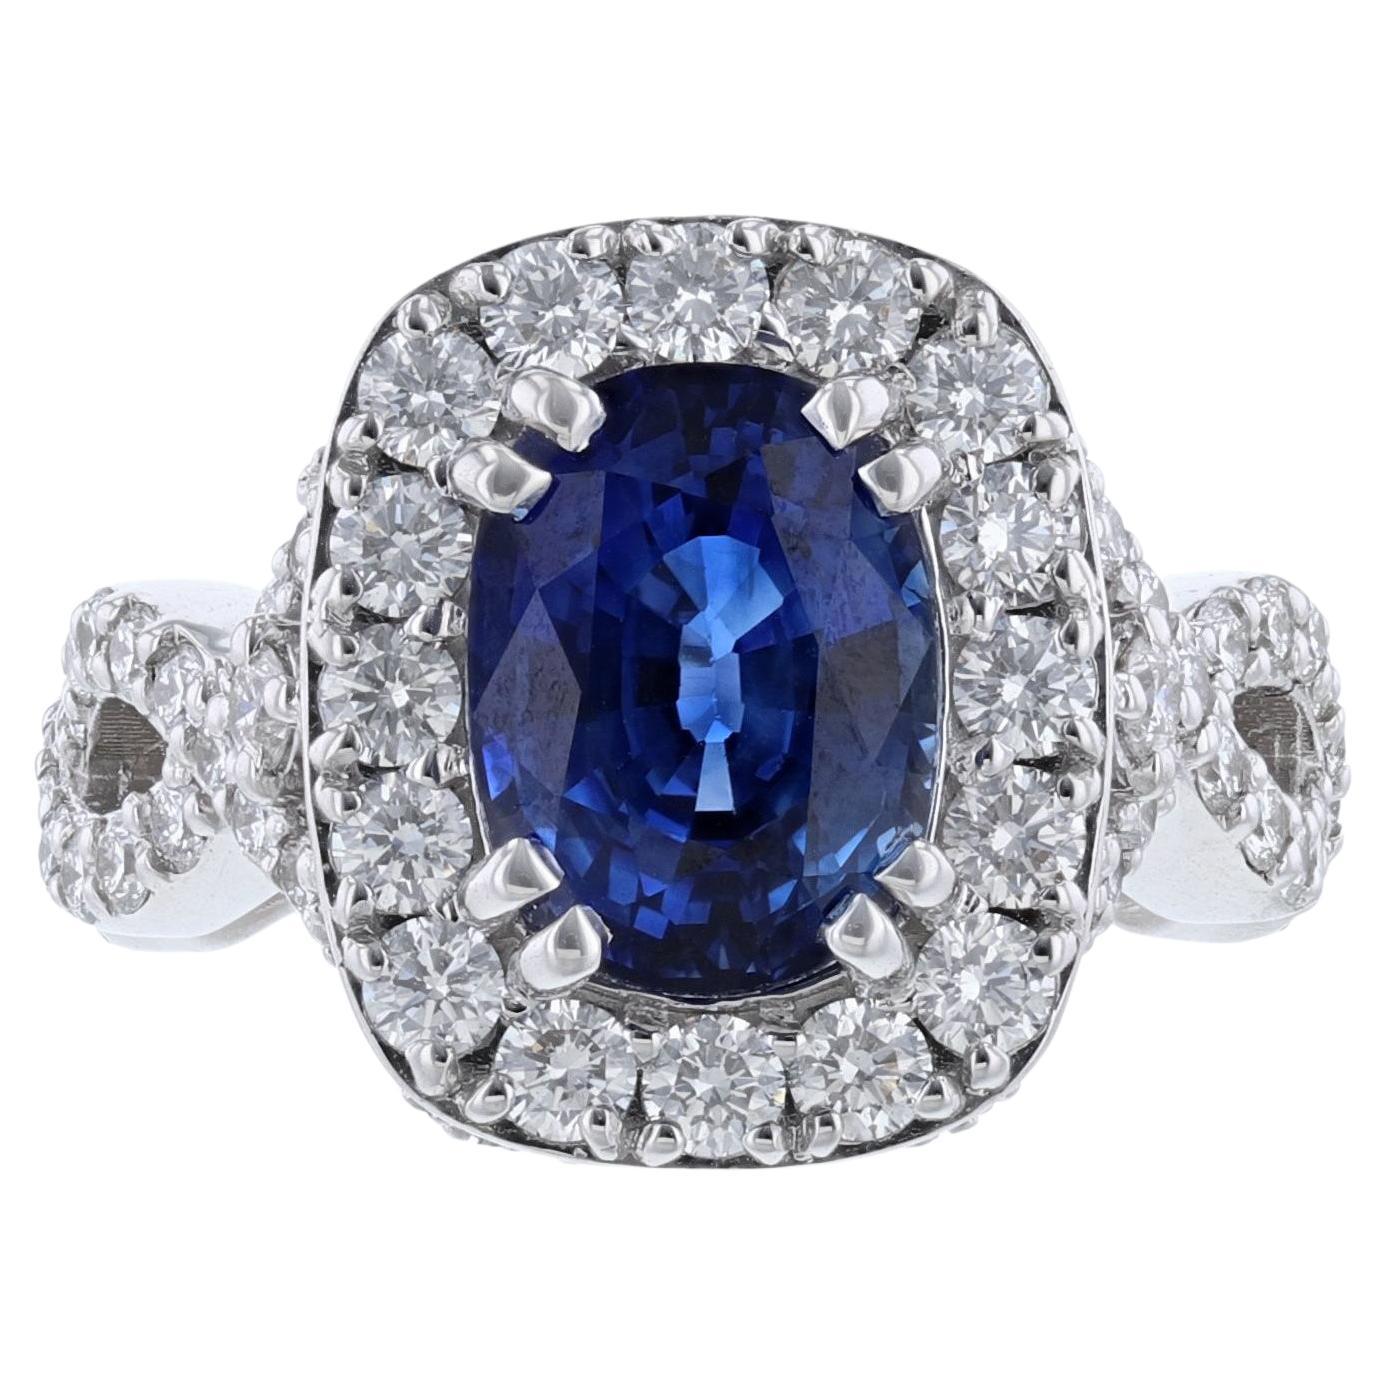 GIA Certified 5.81 Carat Madagascar Corundum Sapphire Diamond Ring